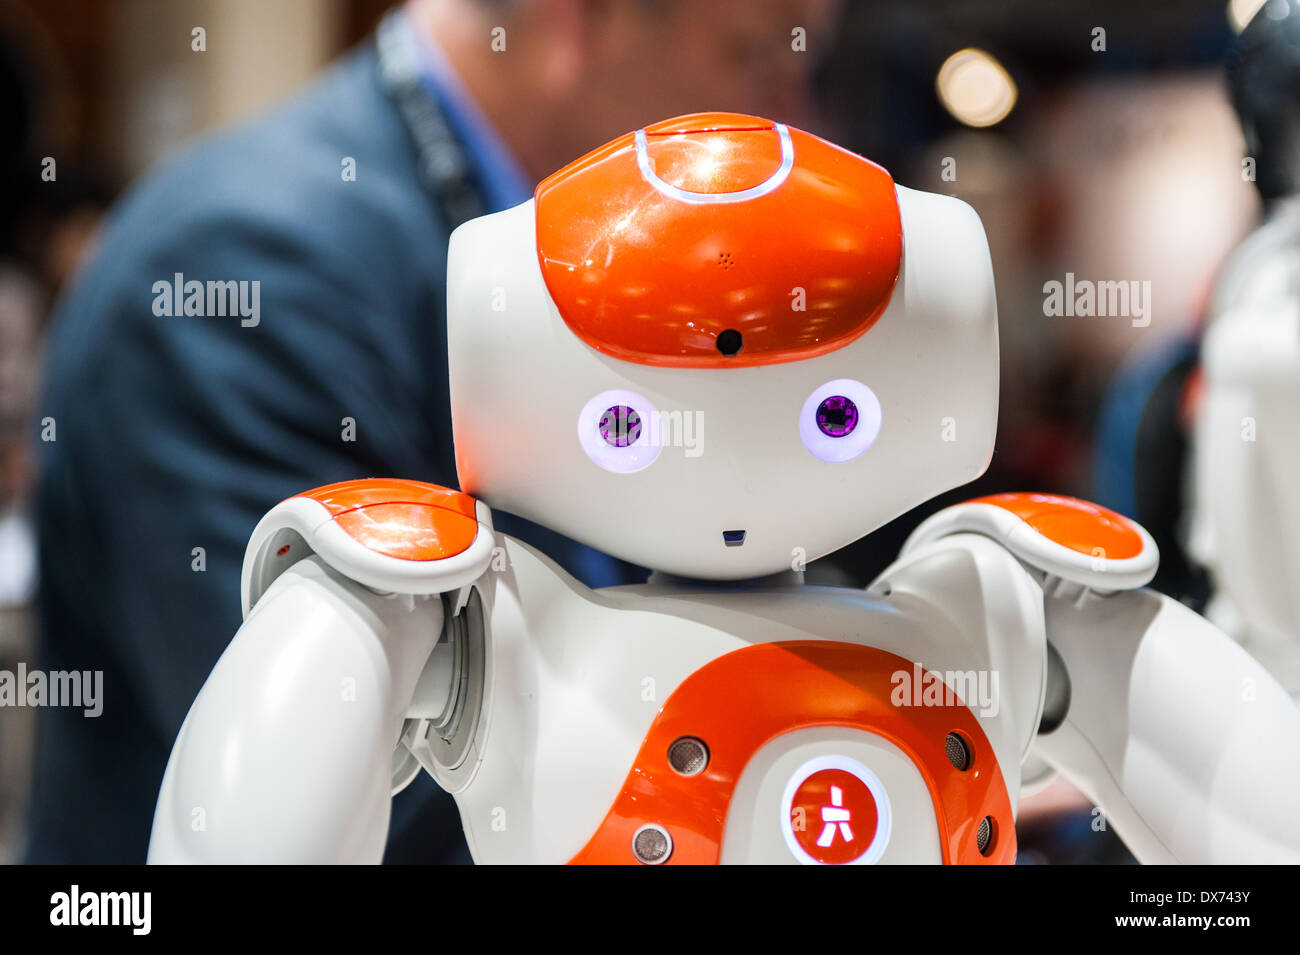 Lyon, France - 19 March 2014: NAO Robot by Aldebaran at Innorobo 2014, the 4th international trade show on service robotics. Credit:  Piero Cruciatti/Alamy Live News Stock Photo